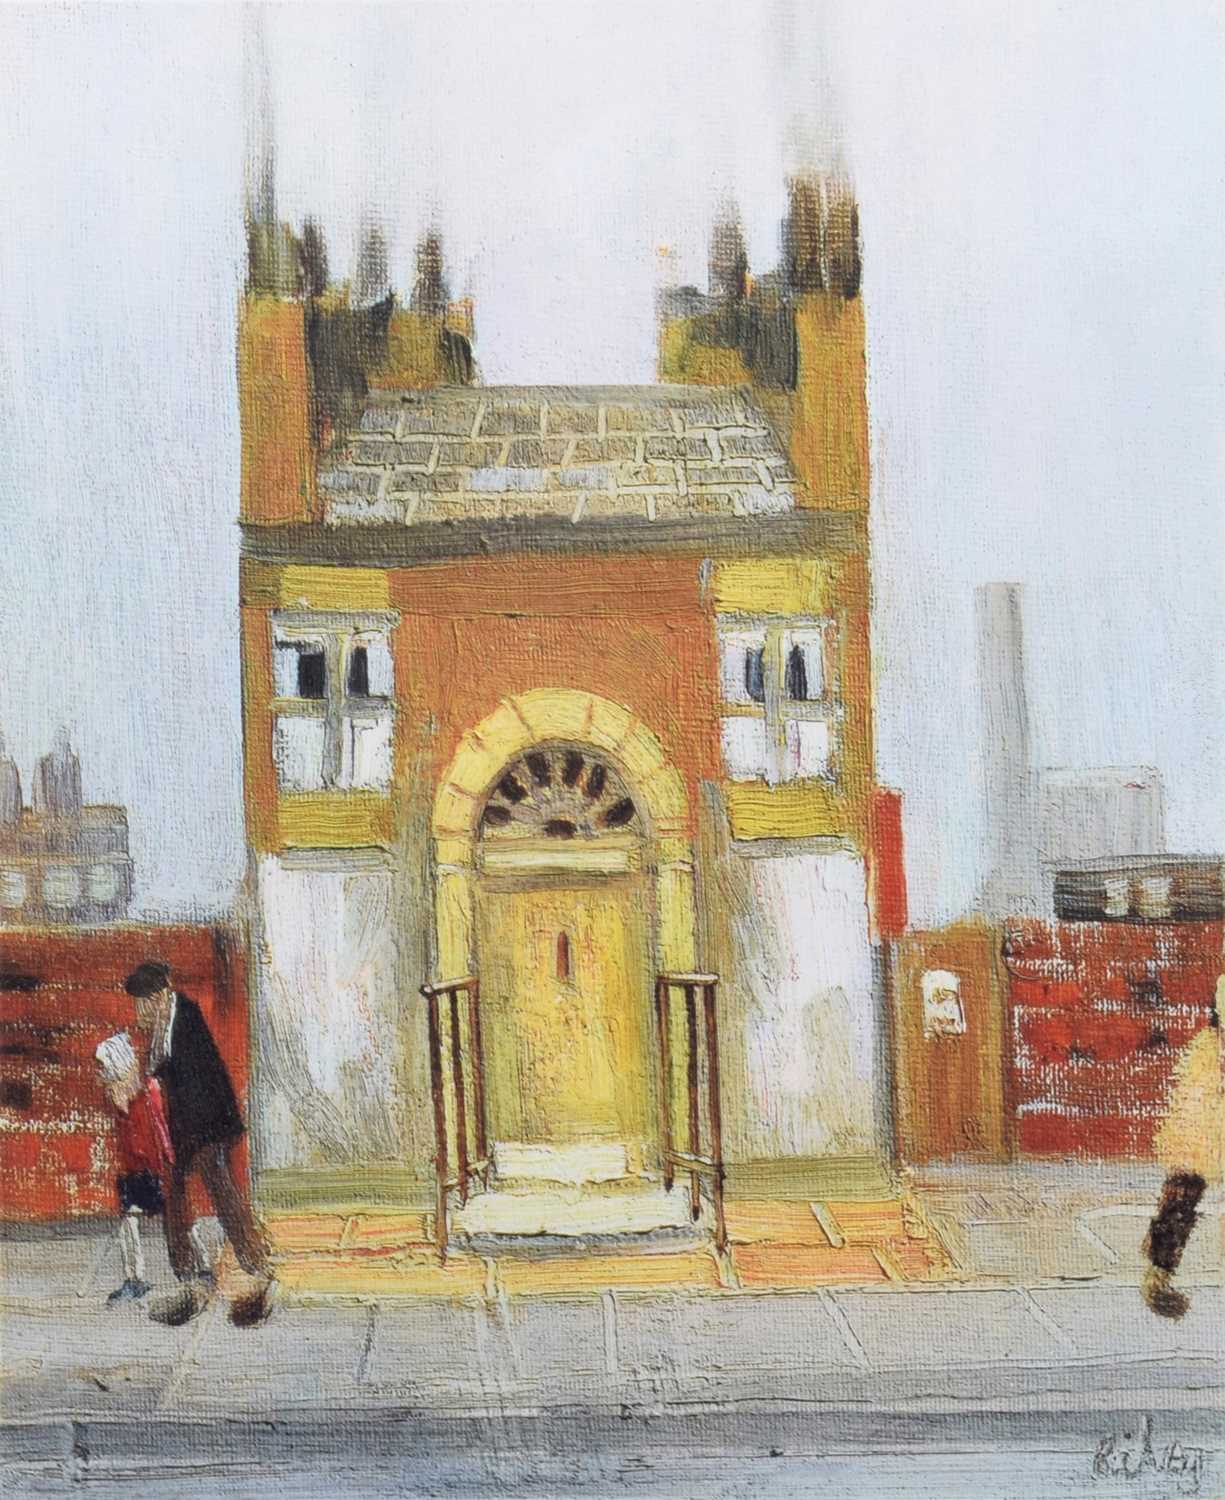 Harold Riley (British 1934-) "The Yellow Door", signed print.